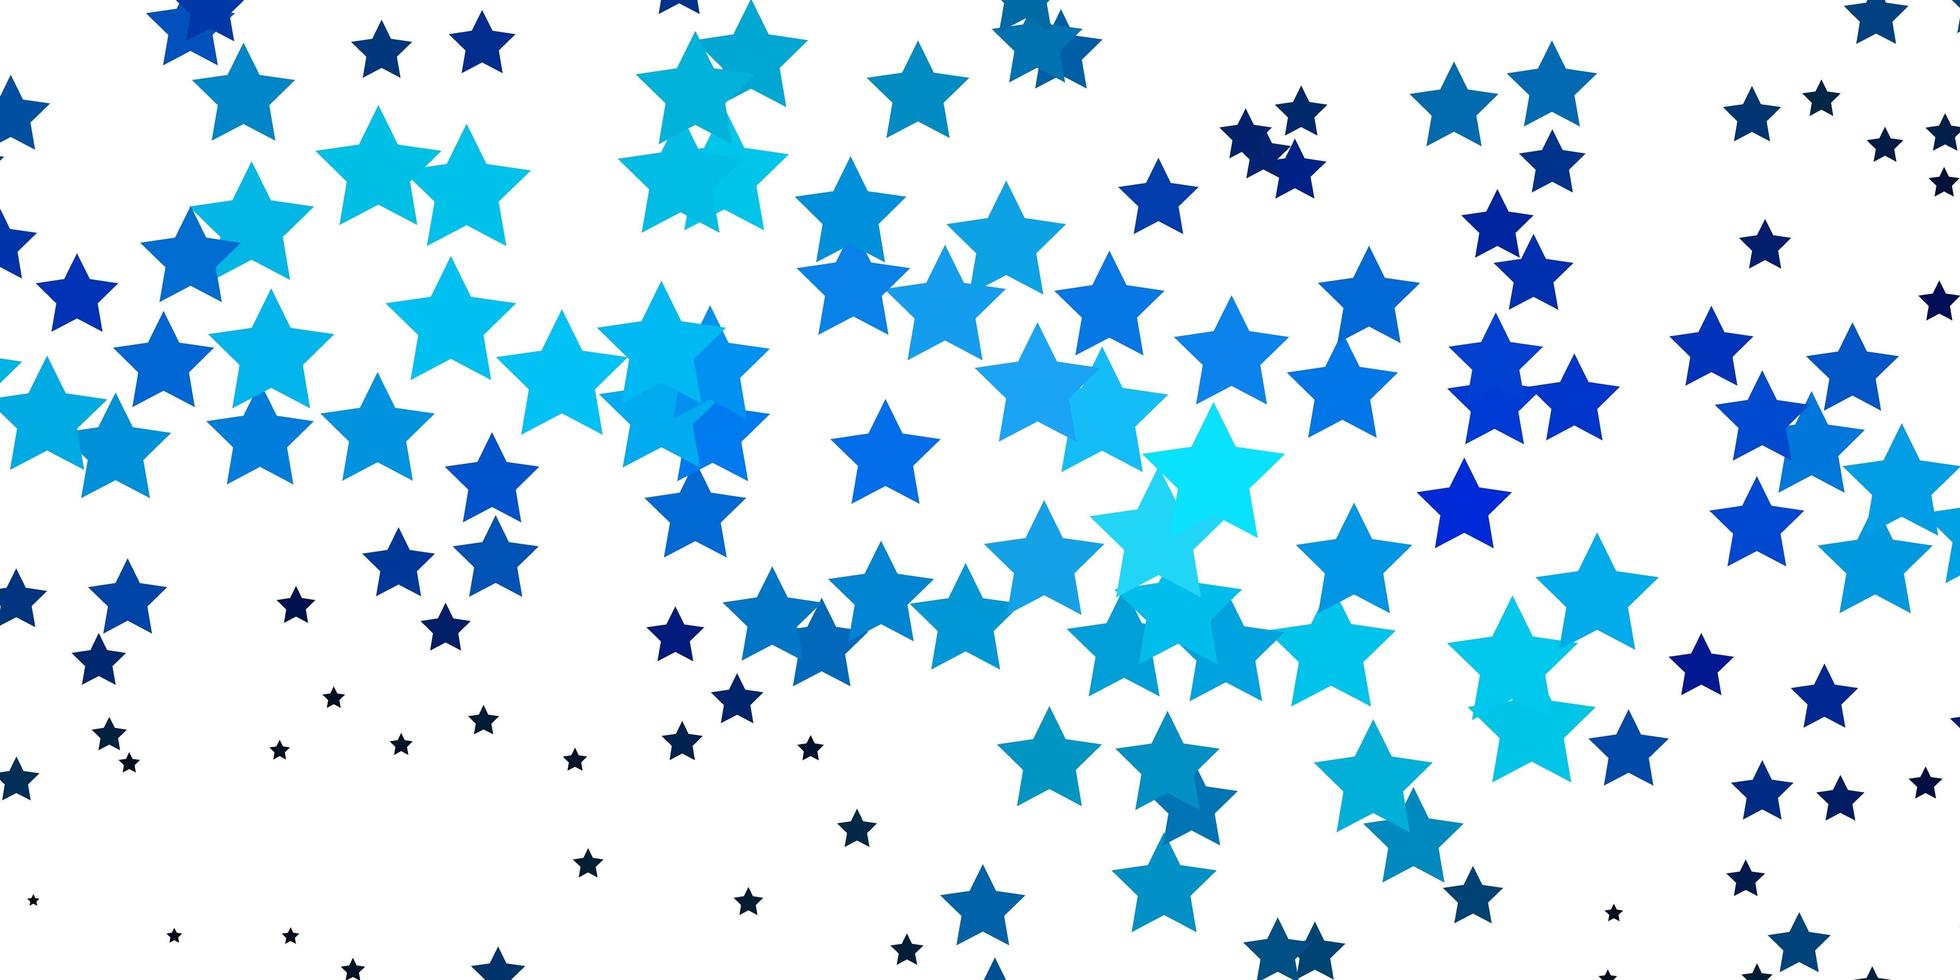 textura vector azul escuro com belas estrelas.